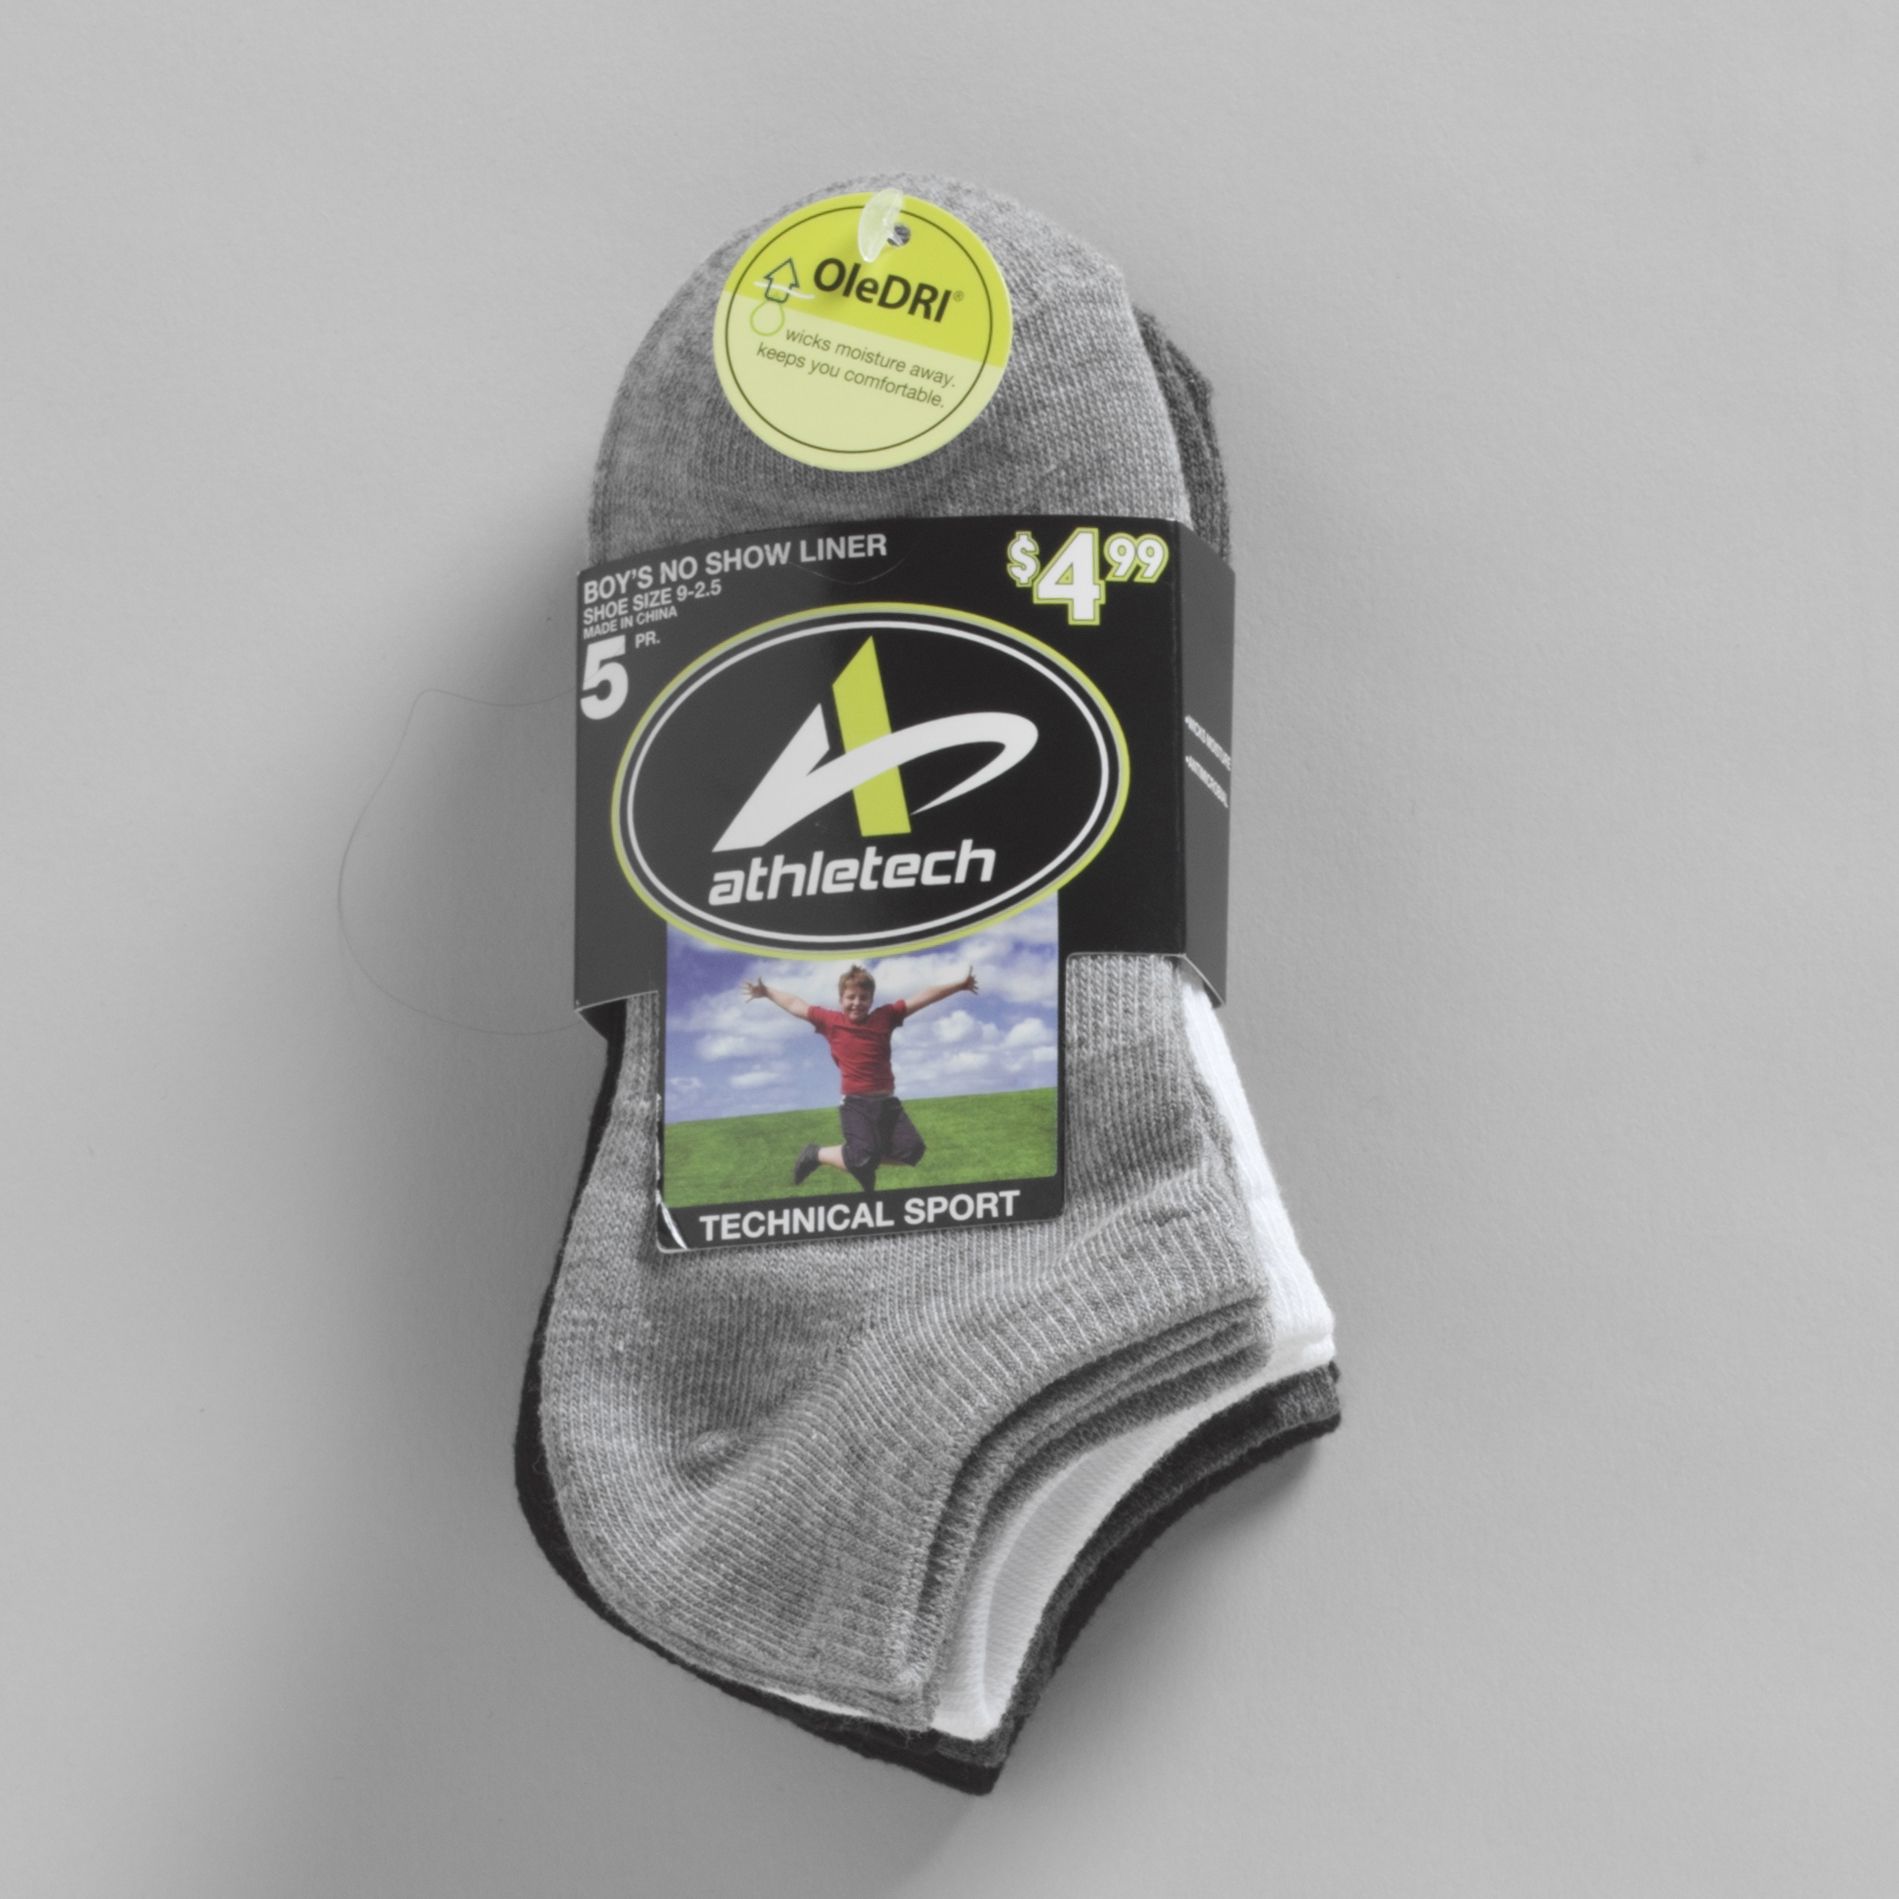 Athletech Boy's Five-Pair No Show Liner Socks